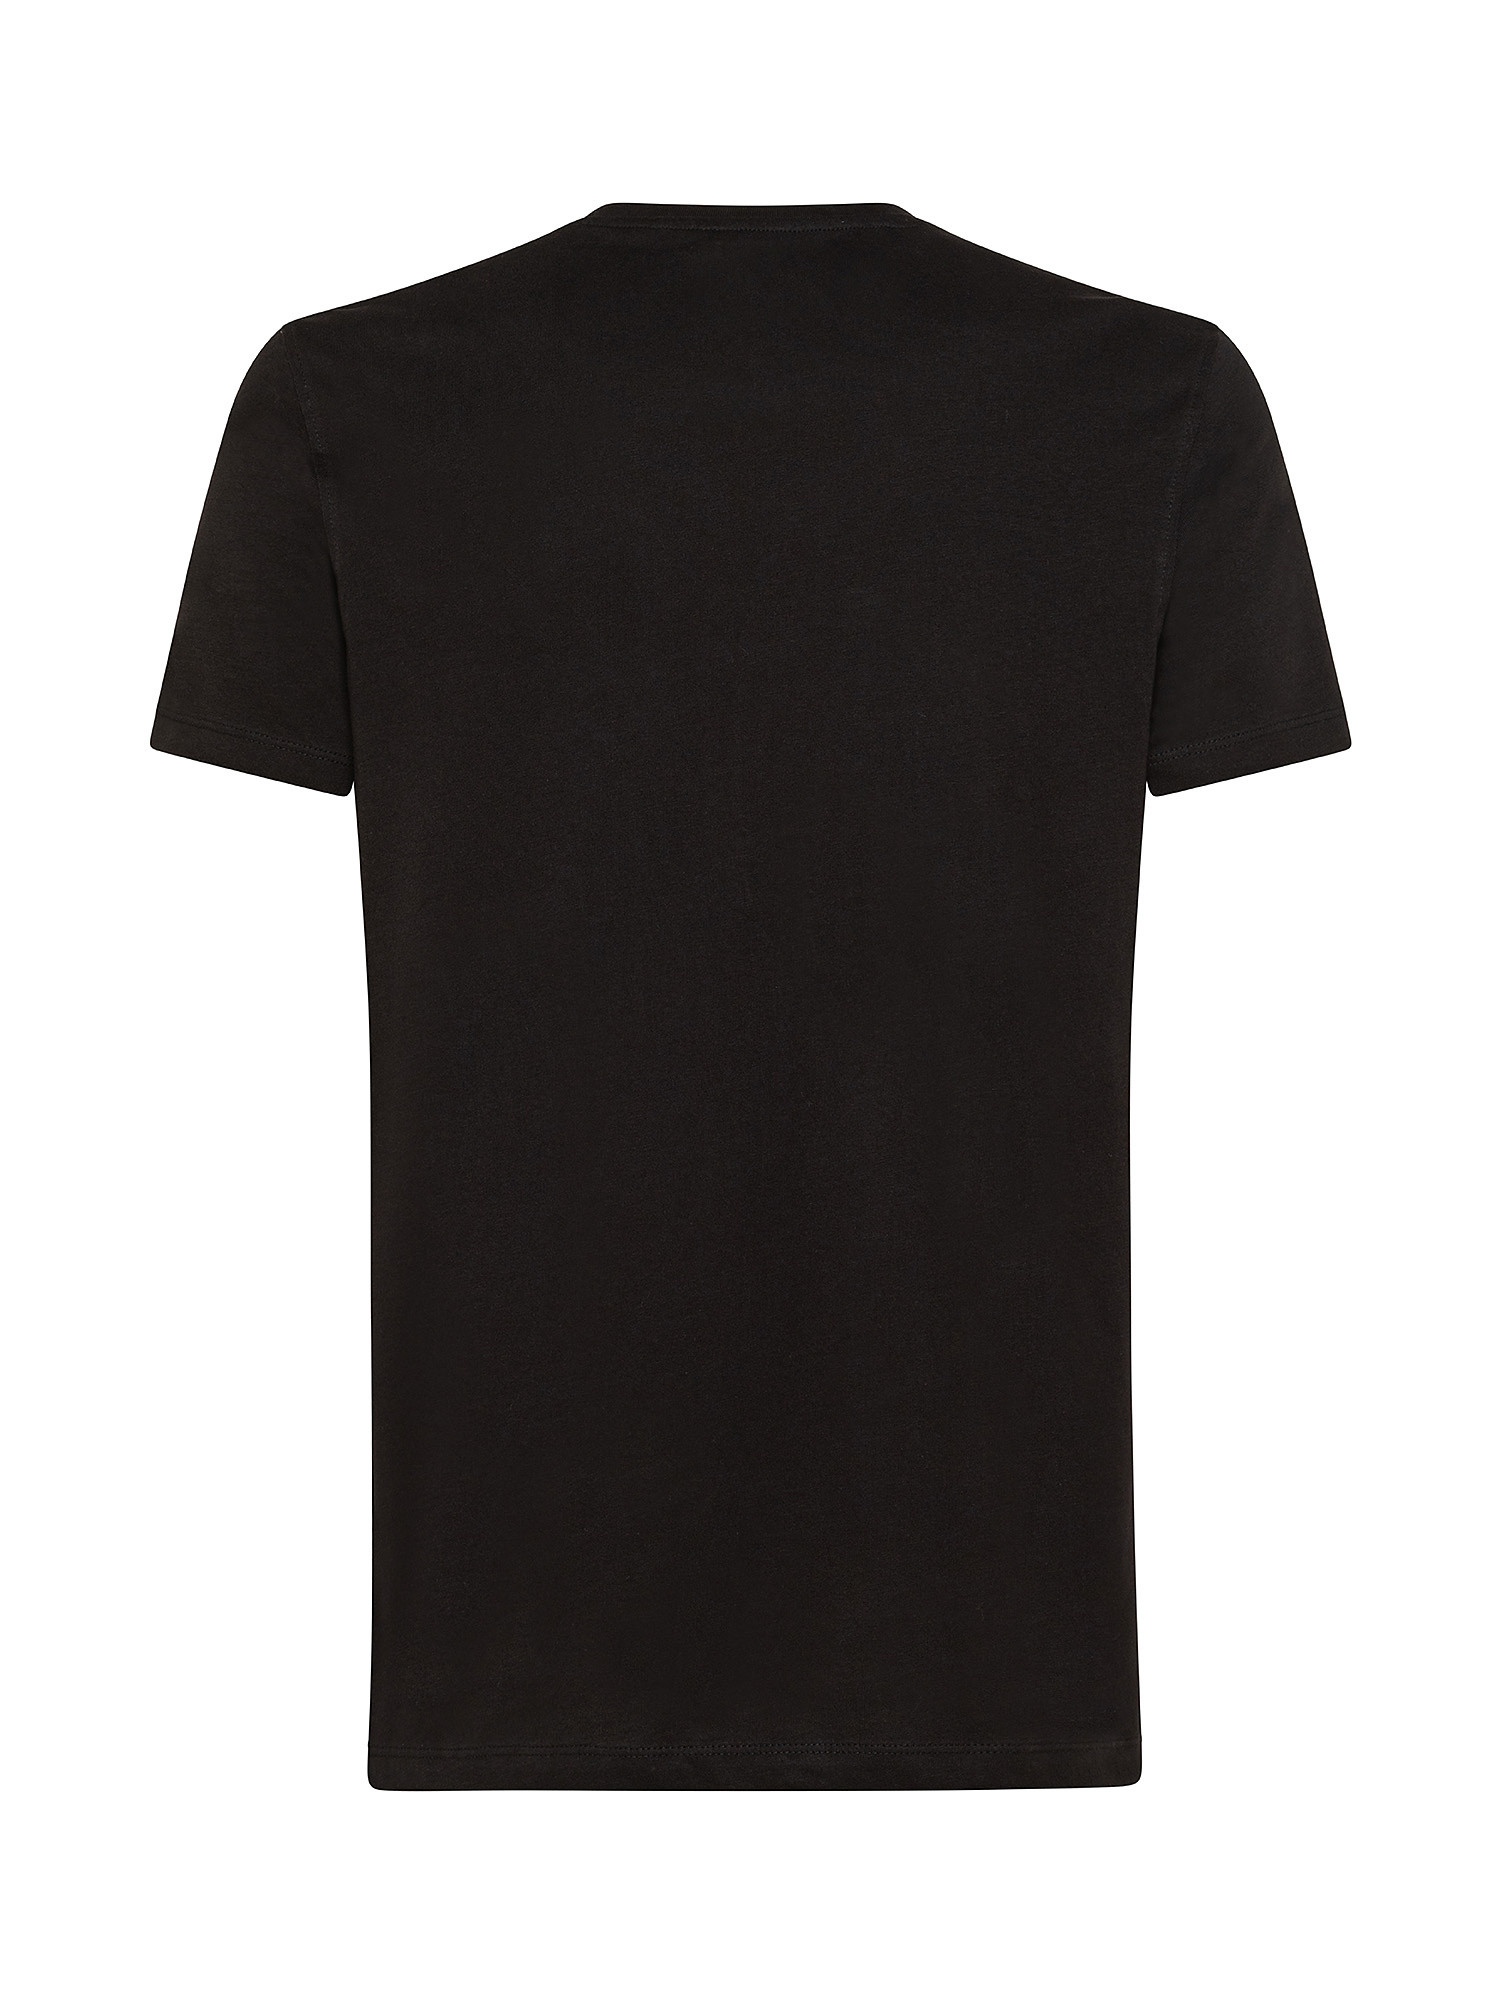 Luca D'Altieri - T-shirt girocollo cotone supima, Nero, large image number 1